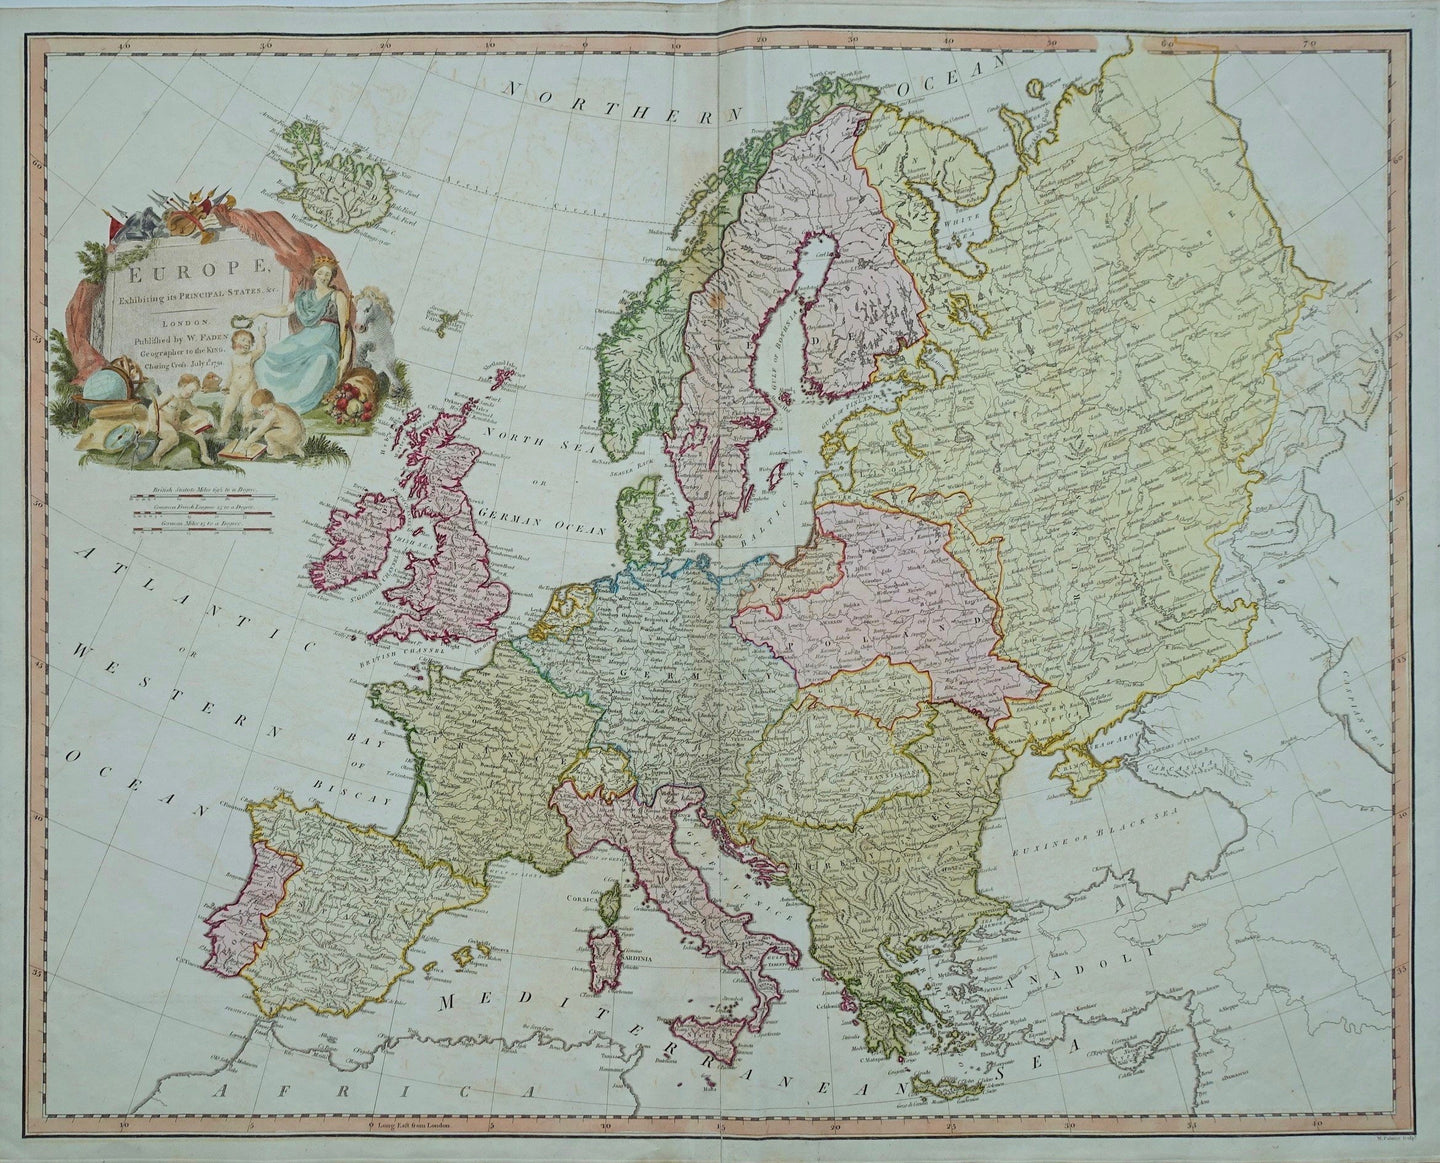 Europa Europe - William Faden - 1791